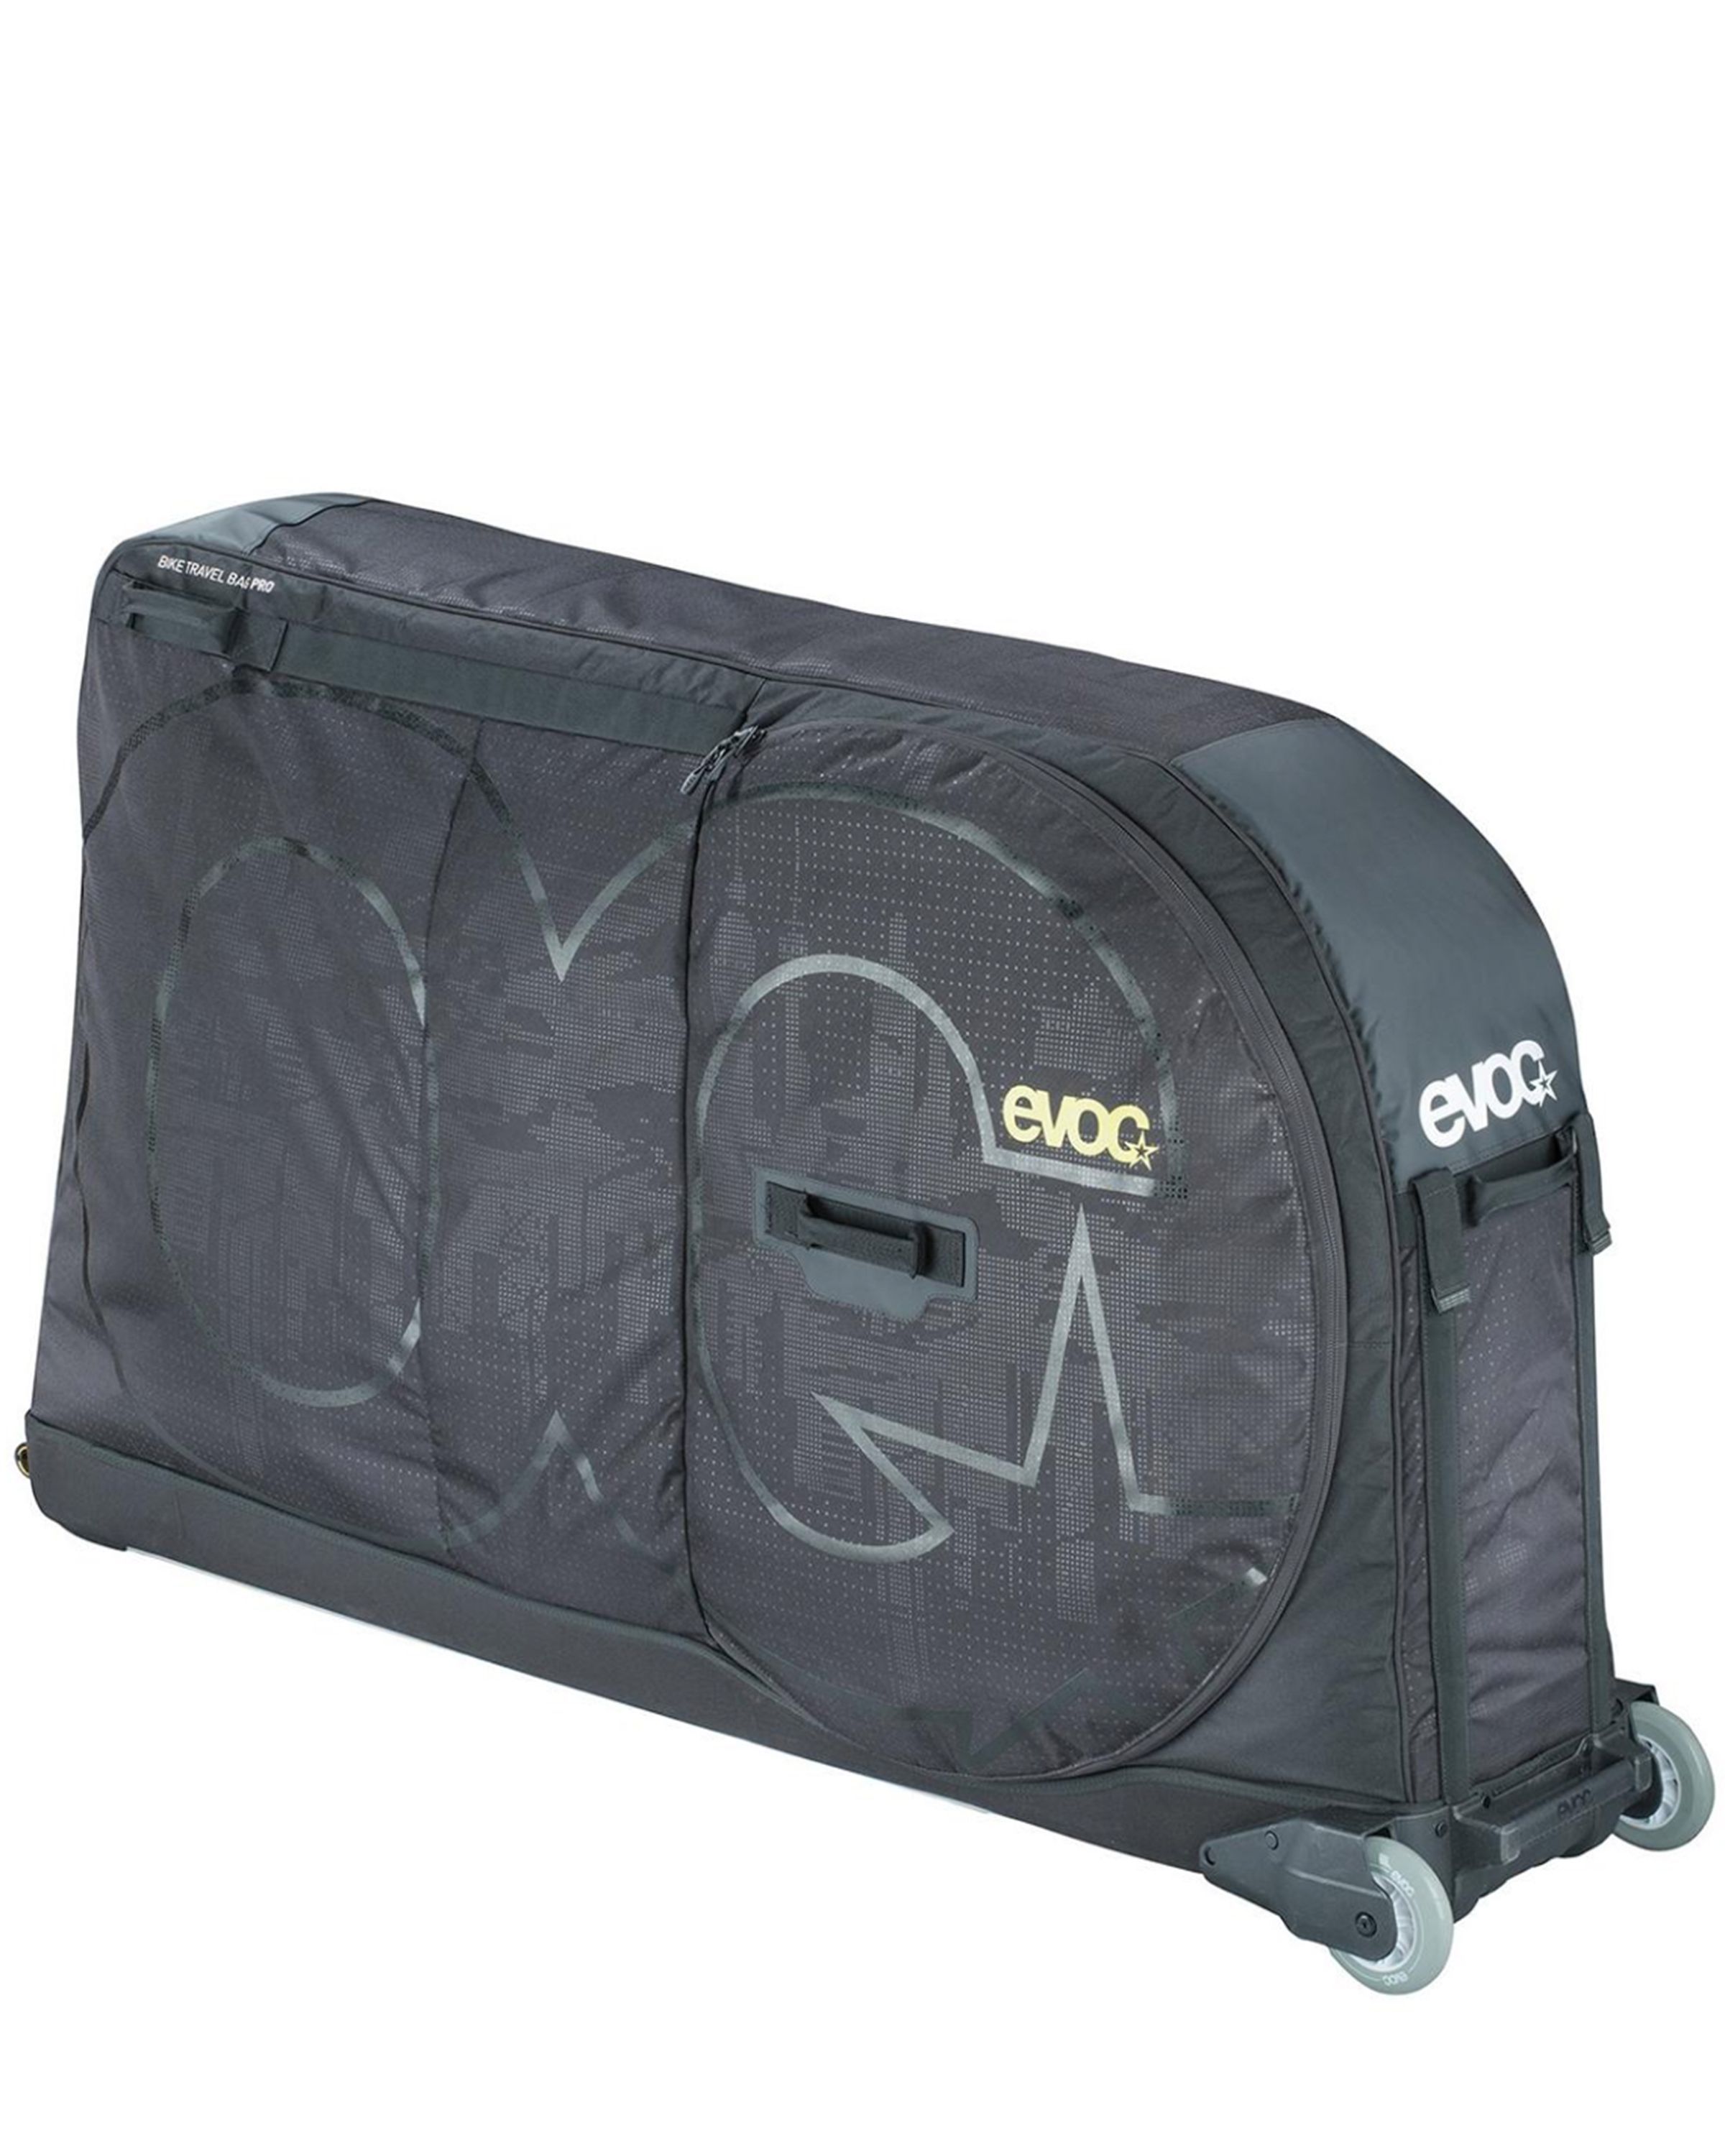 GORIX Bike Travel Bag Case Carry Transport Storage Luggage Road Mountain Bicycle GX-Ca3 